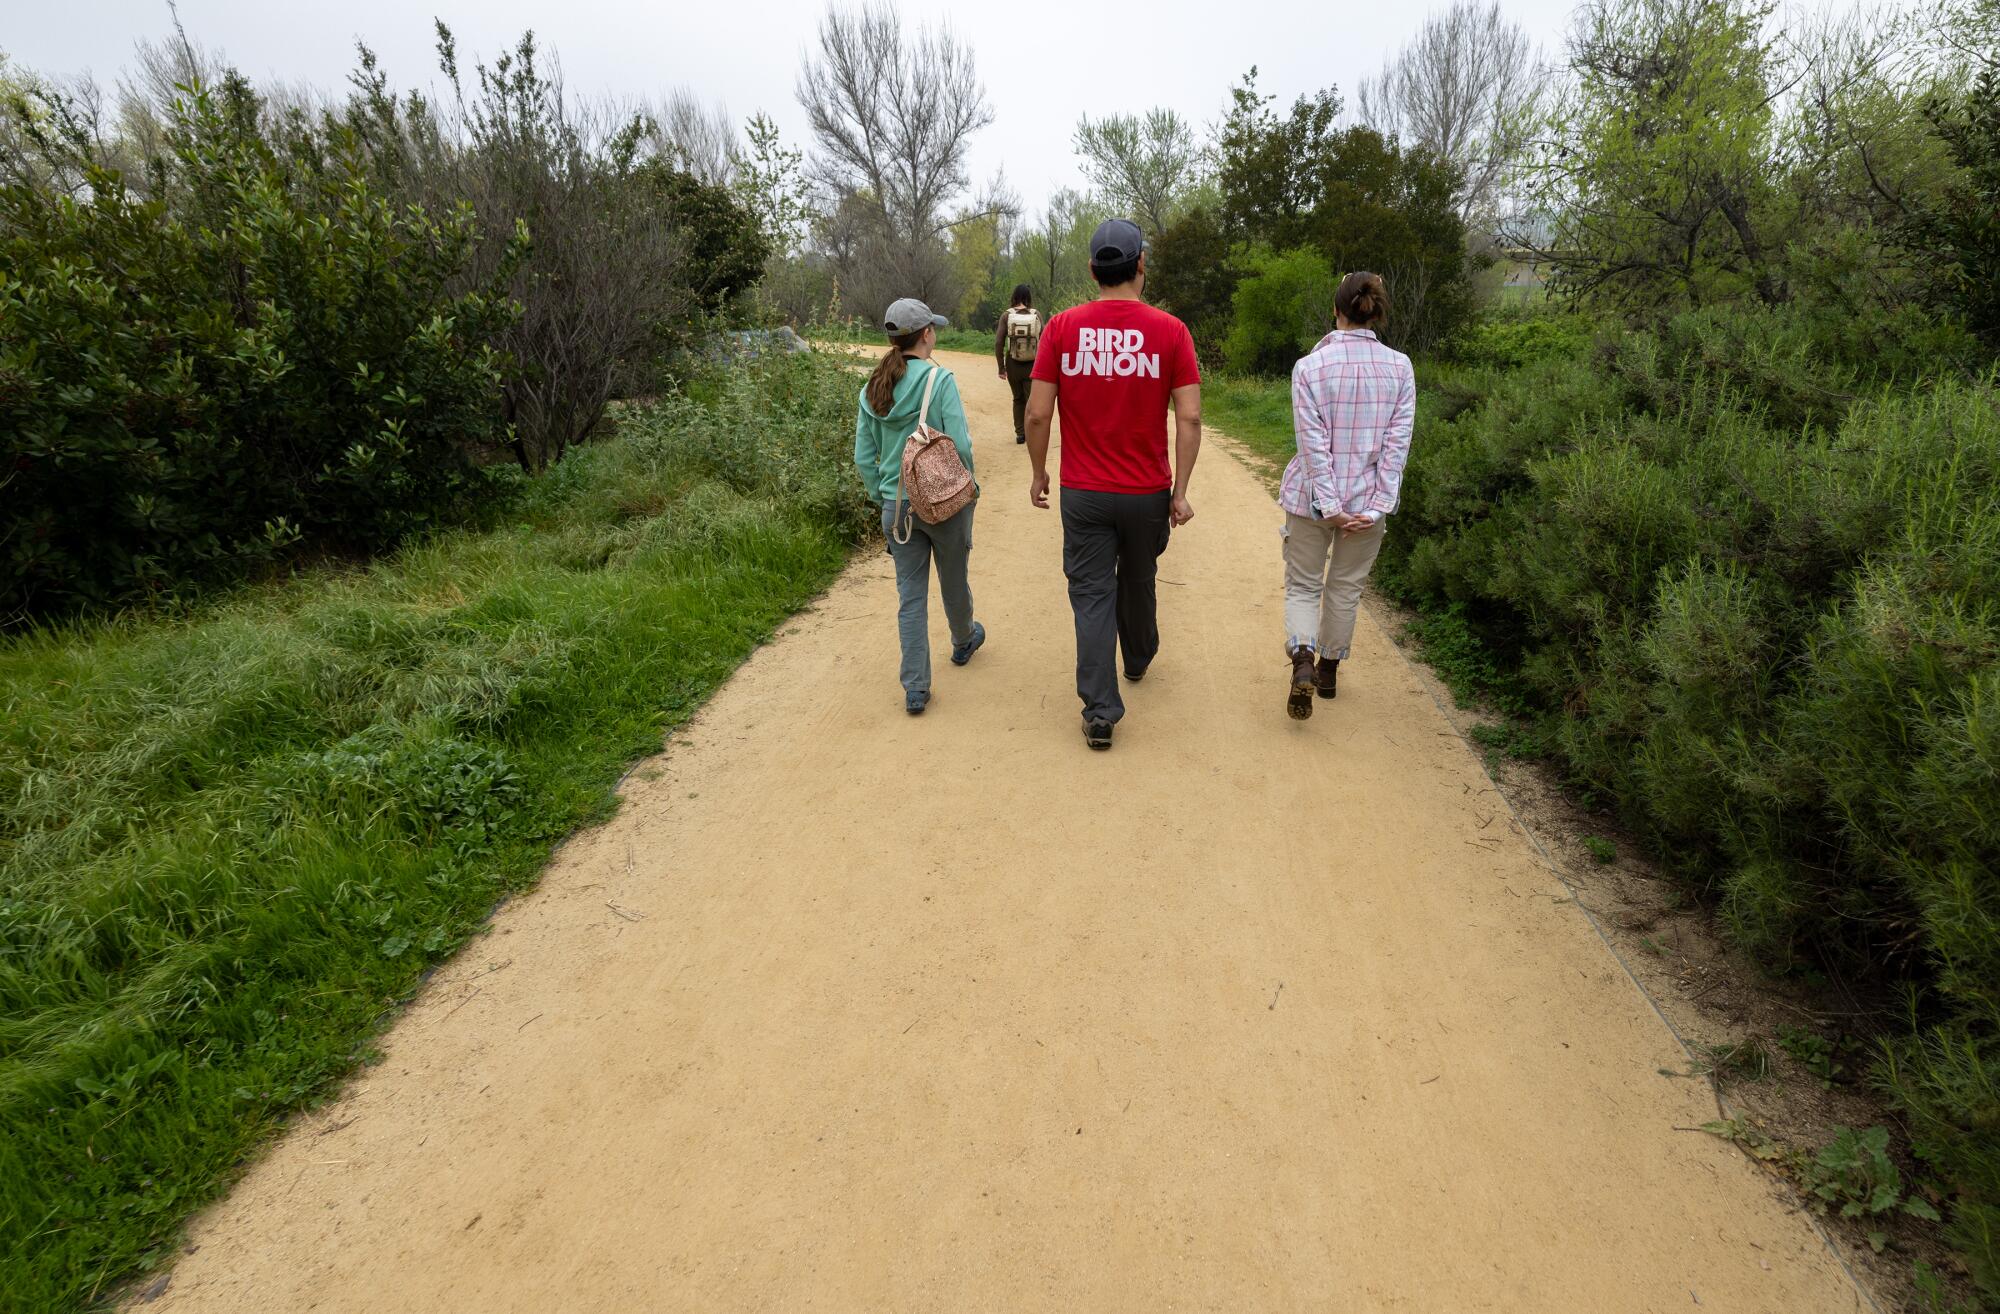 Three people walk together along a leafy path